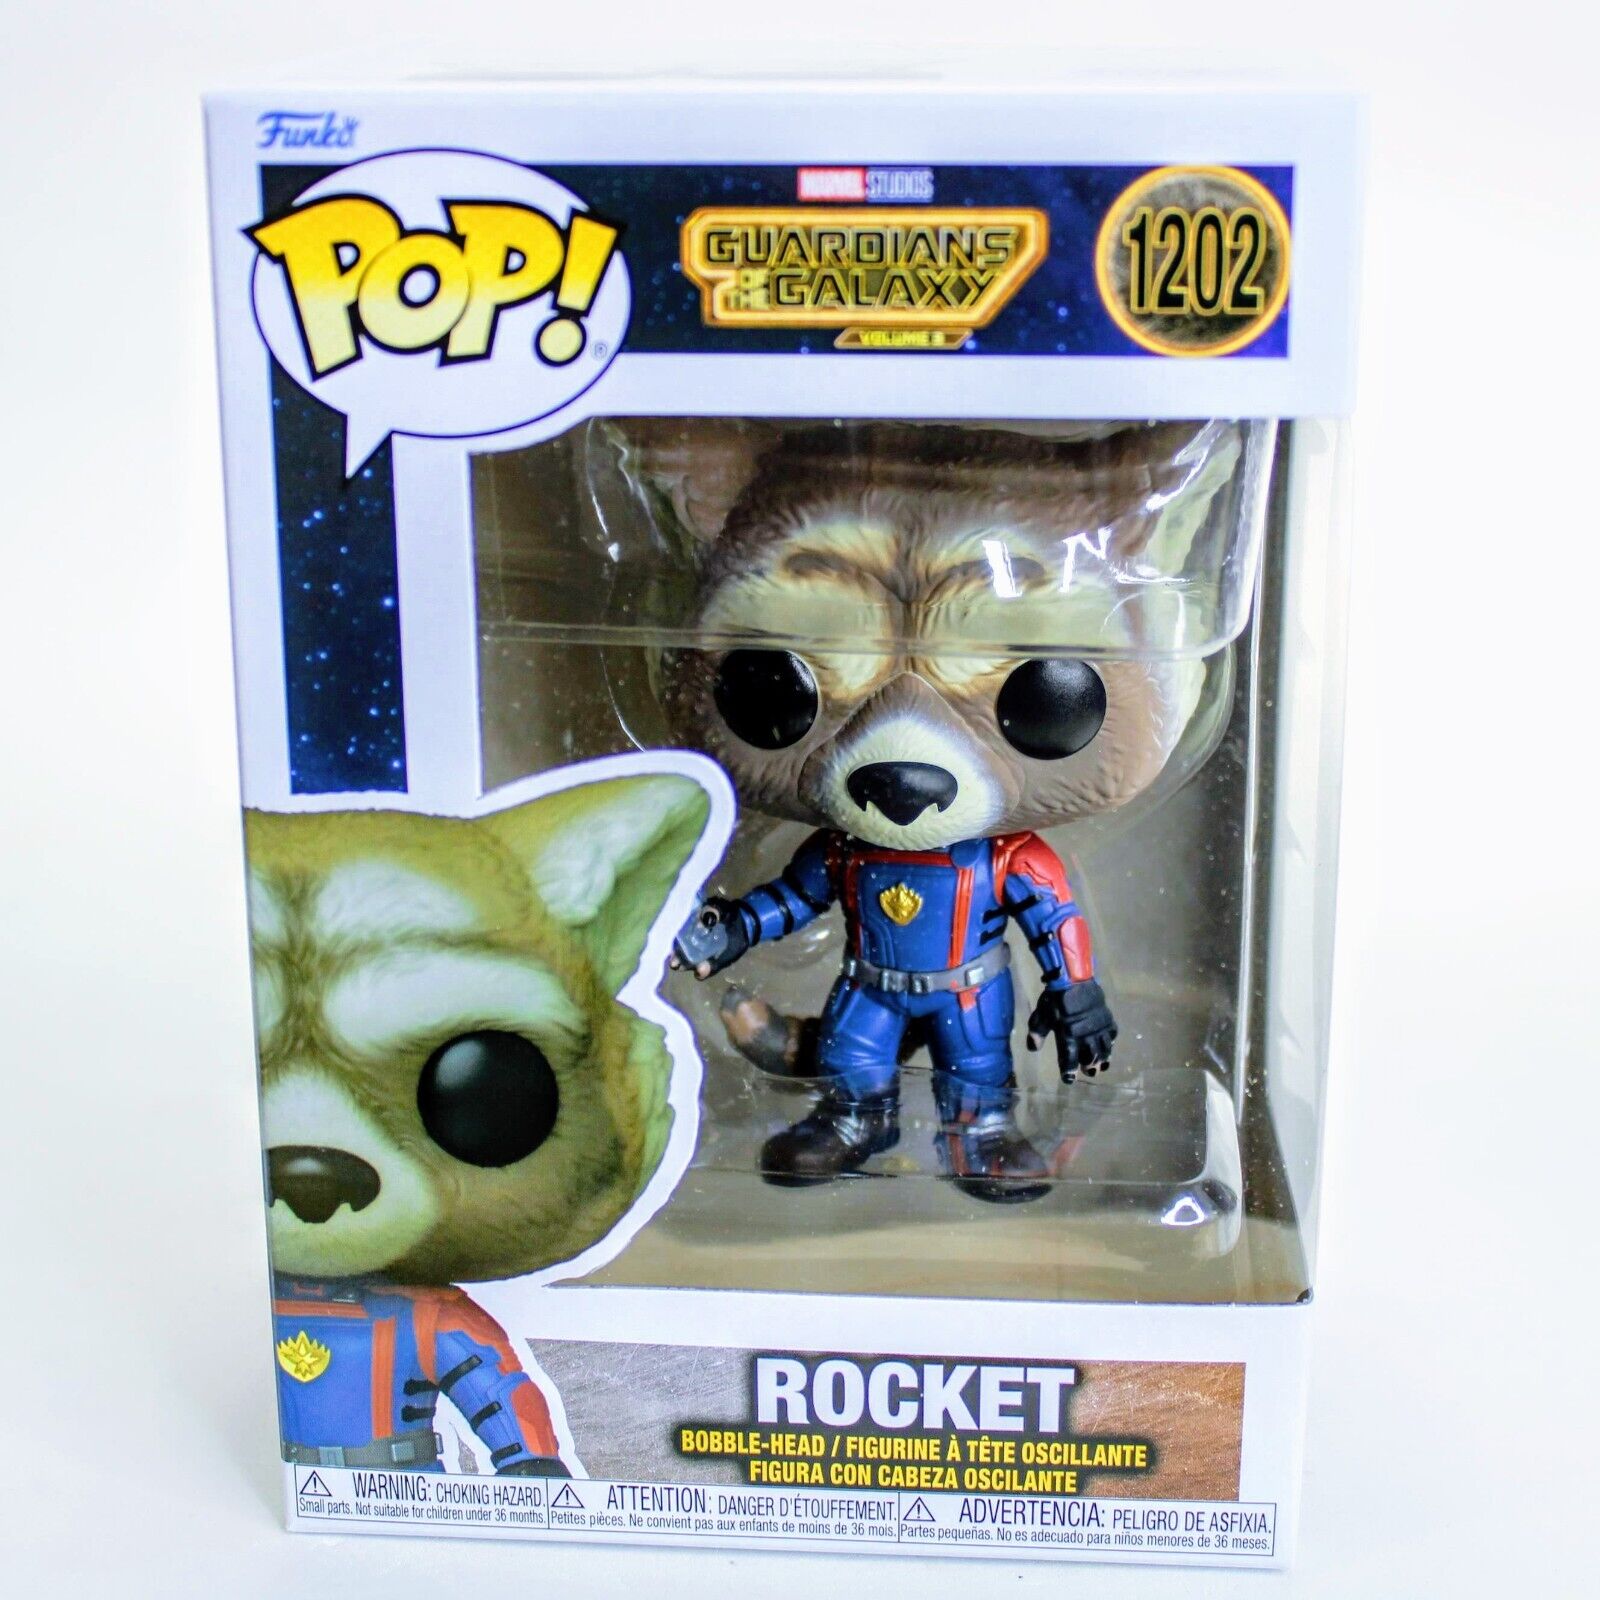 Buy Pop! Rocket at Funko.